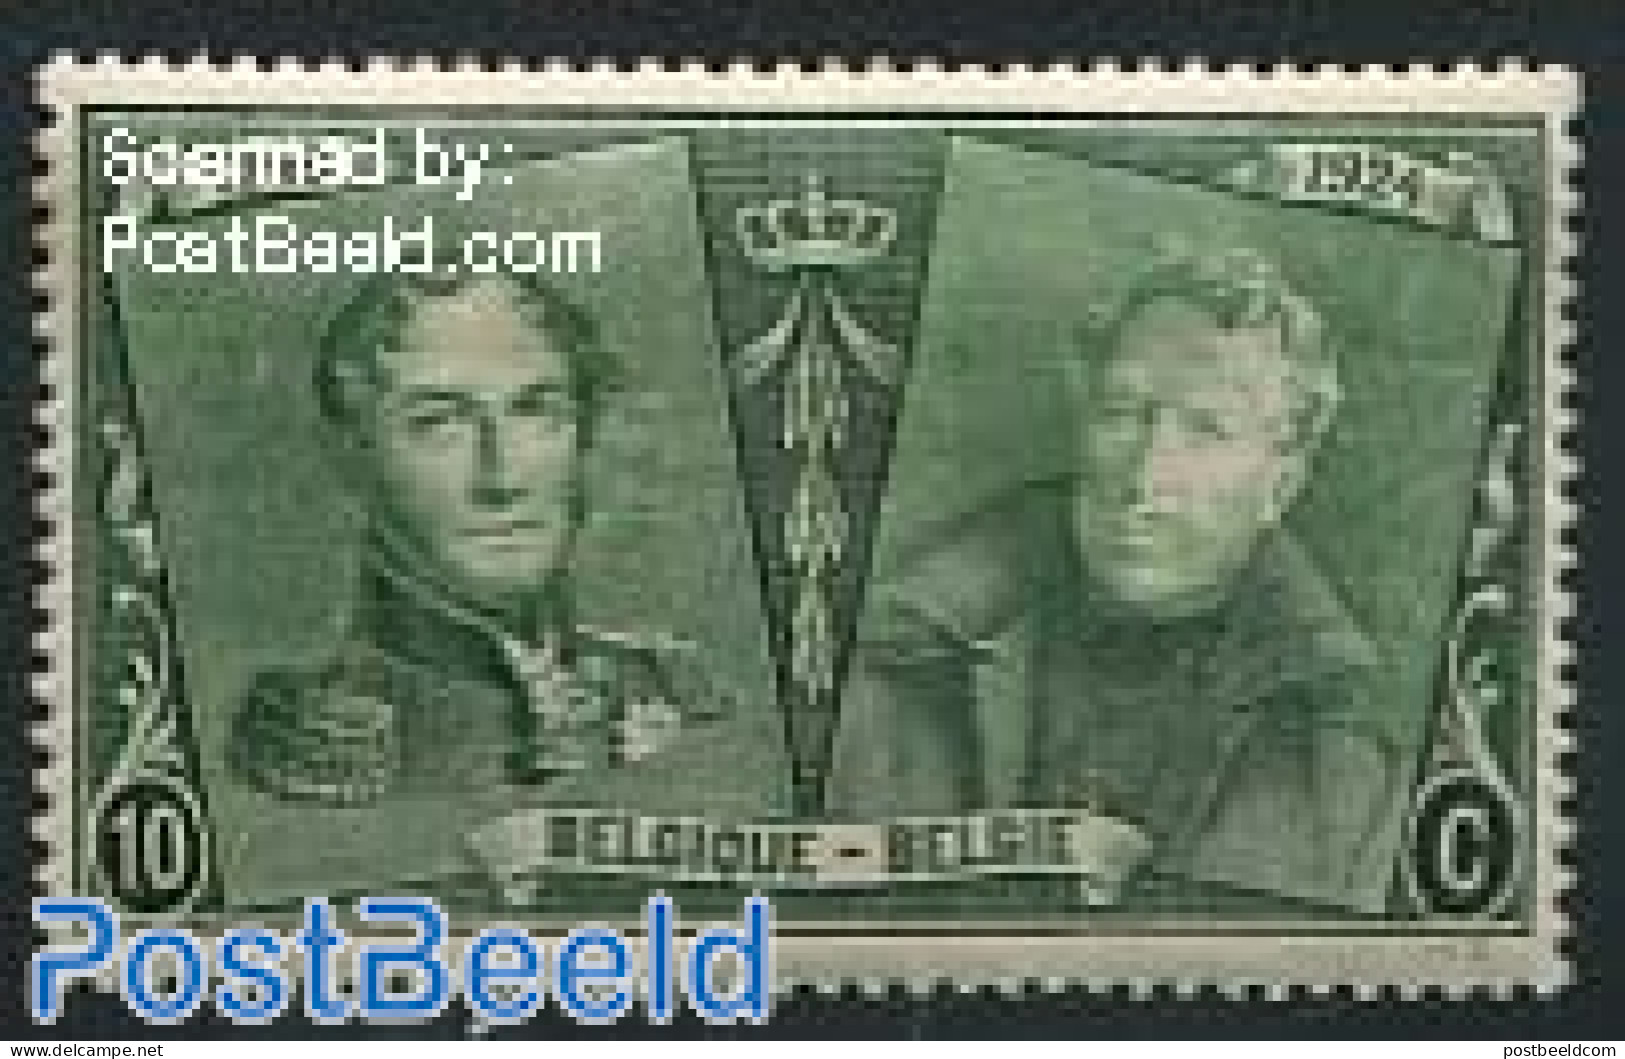 Belgium 1925 10c, Stamp Out Of Set, Mint NH - Ongebruikt